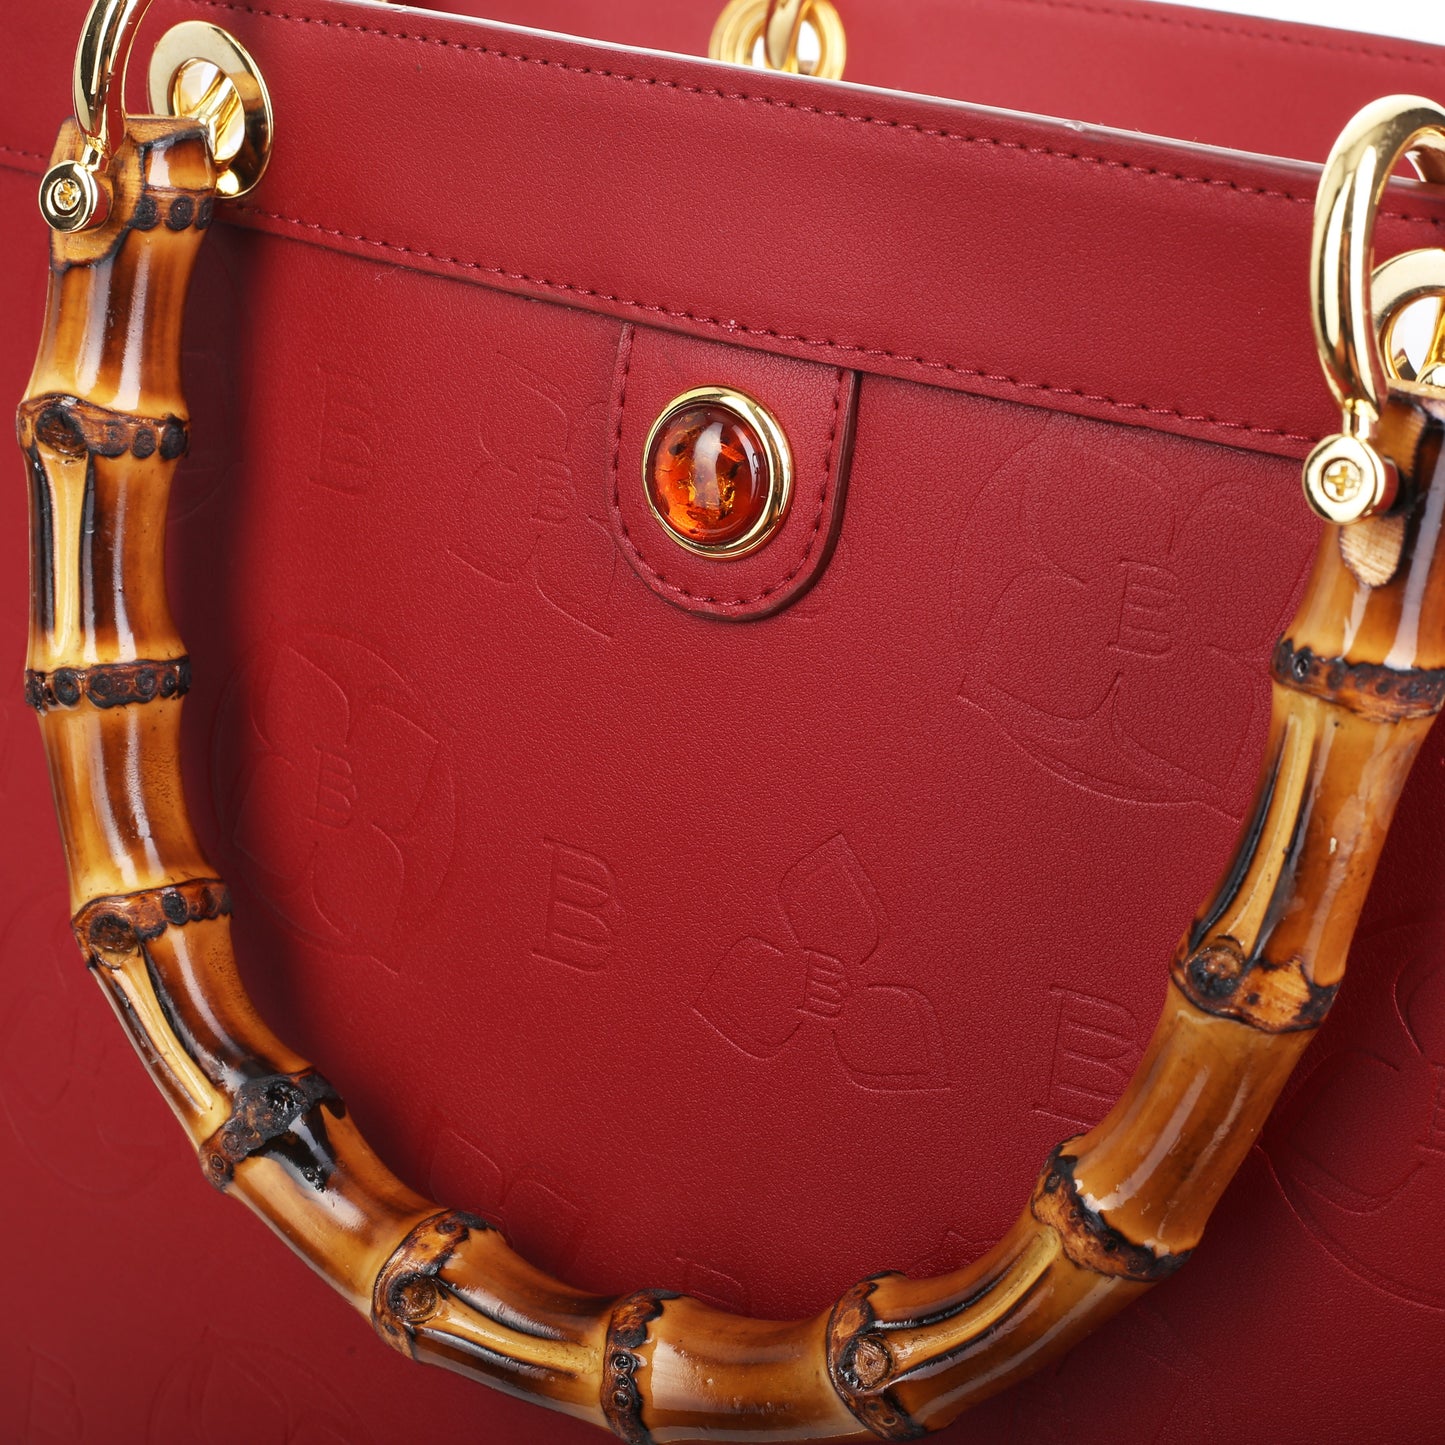 THENA NAPA CLARET women's leather handbag